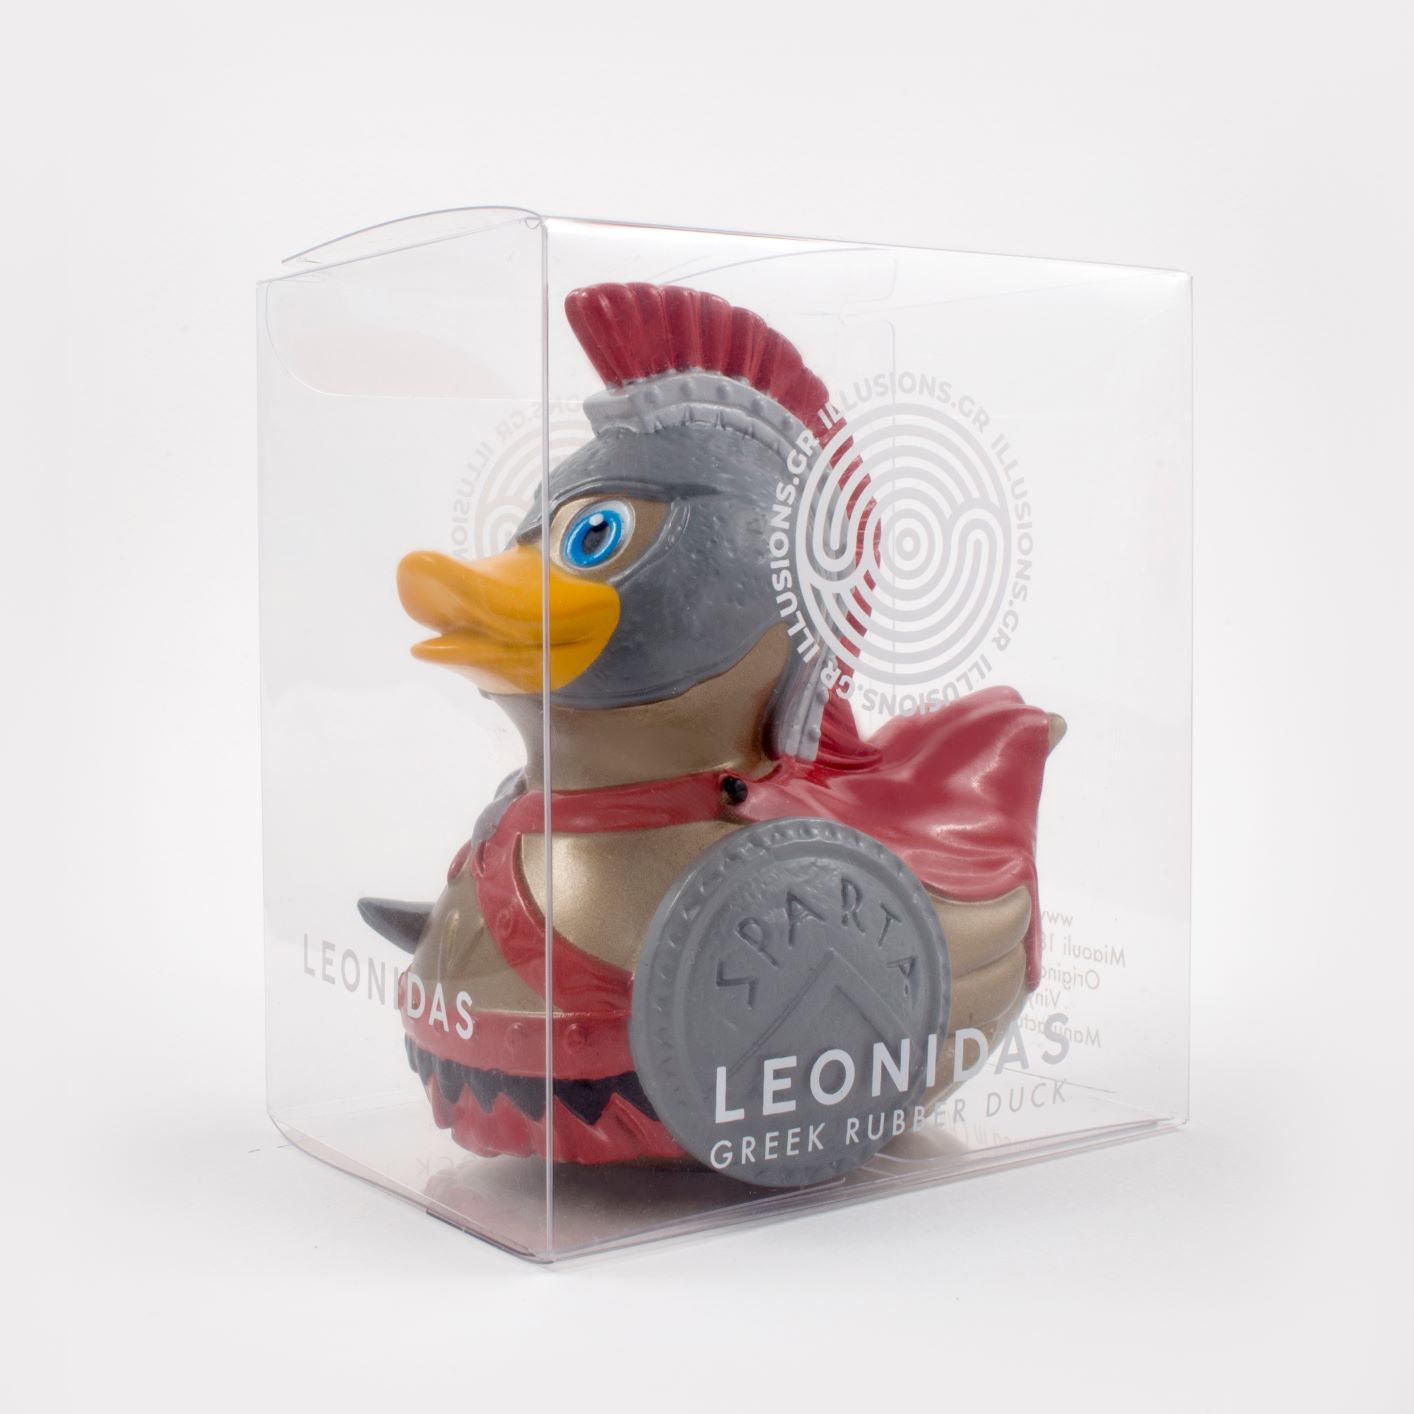 Leonidas Duck.